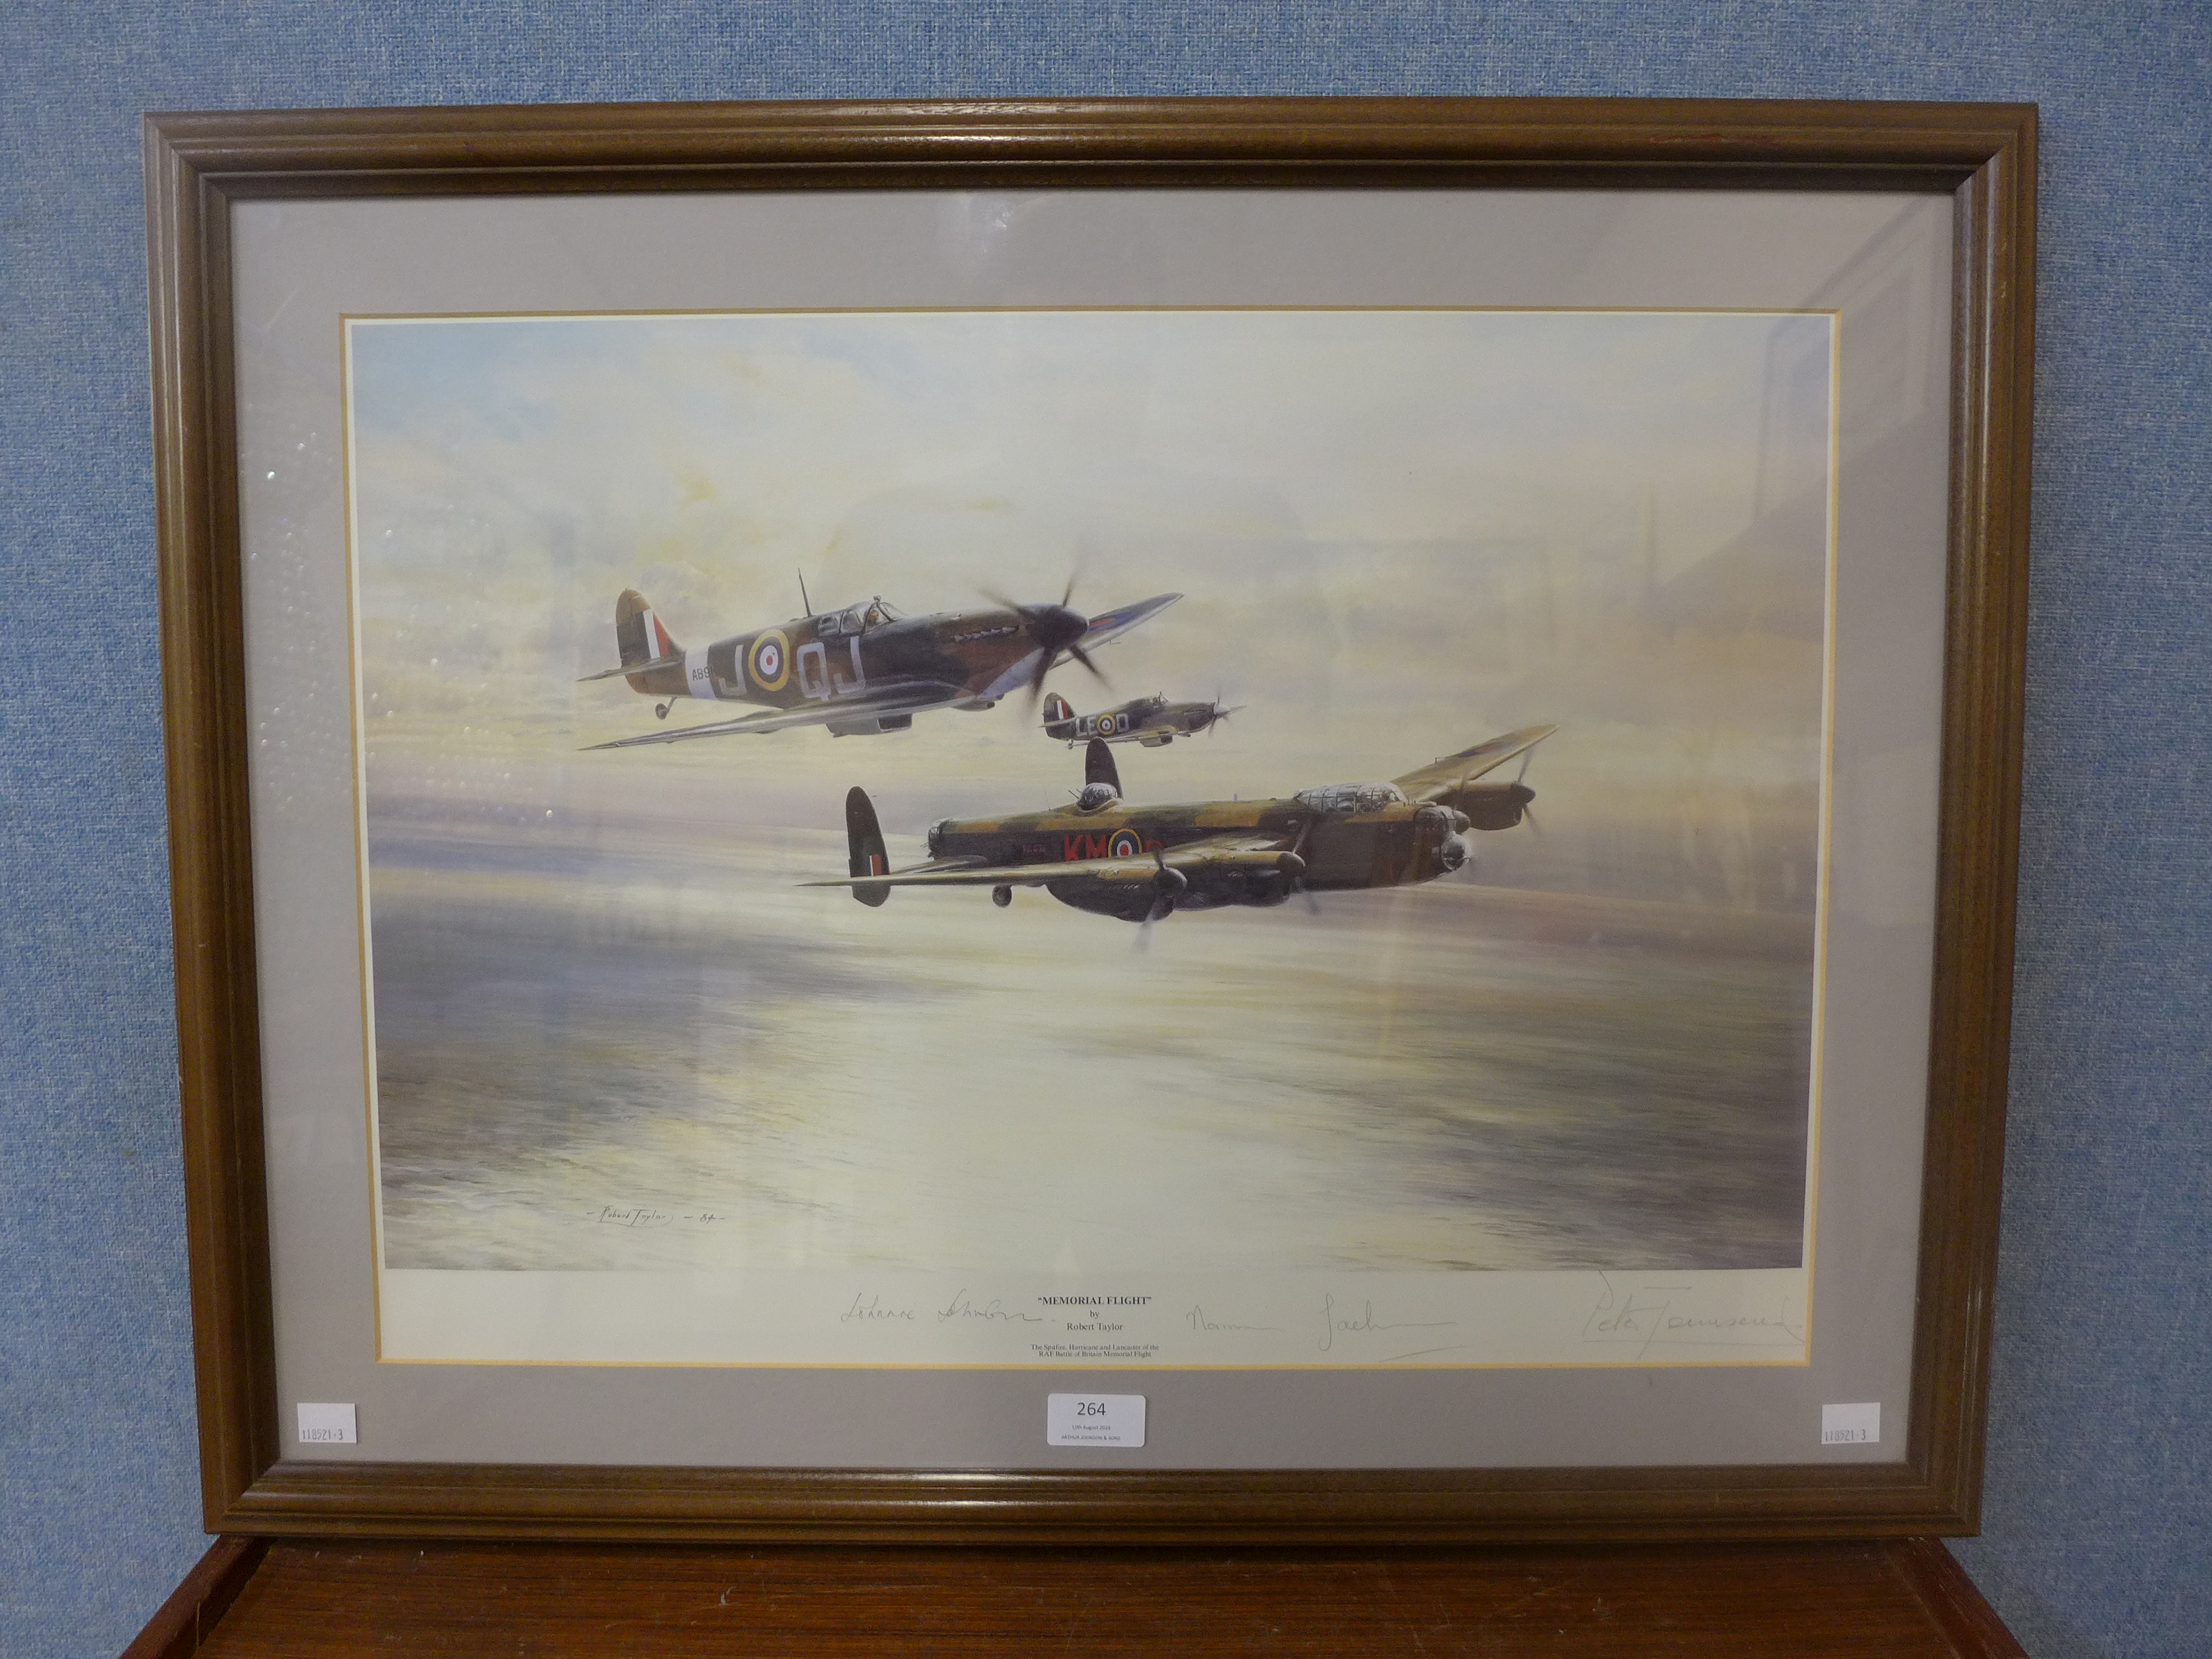 A Robert Taylor print, Memorial Flight, signed by pilots, framed